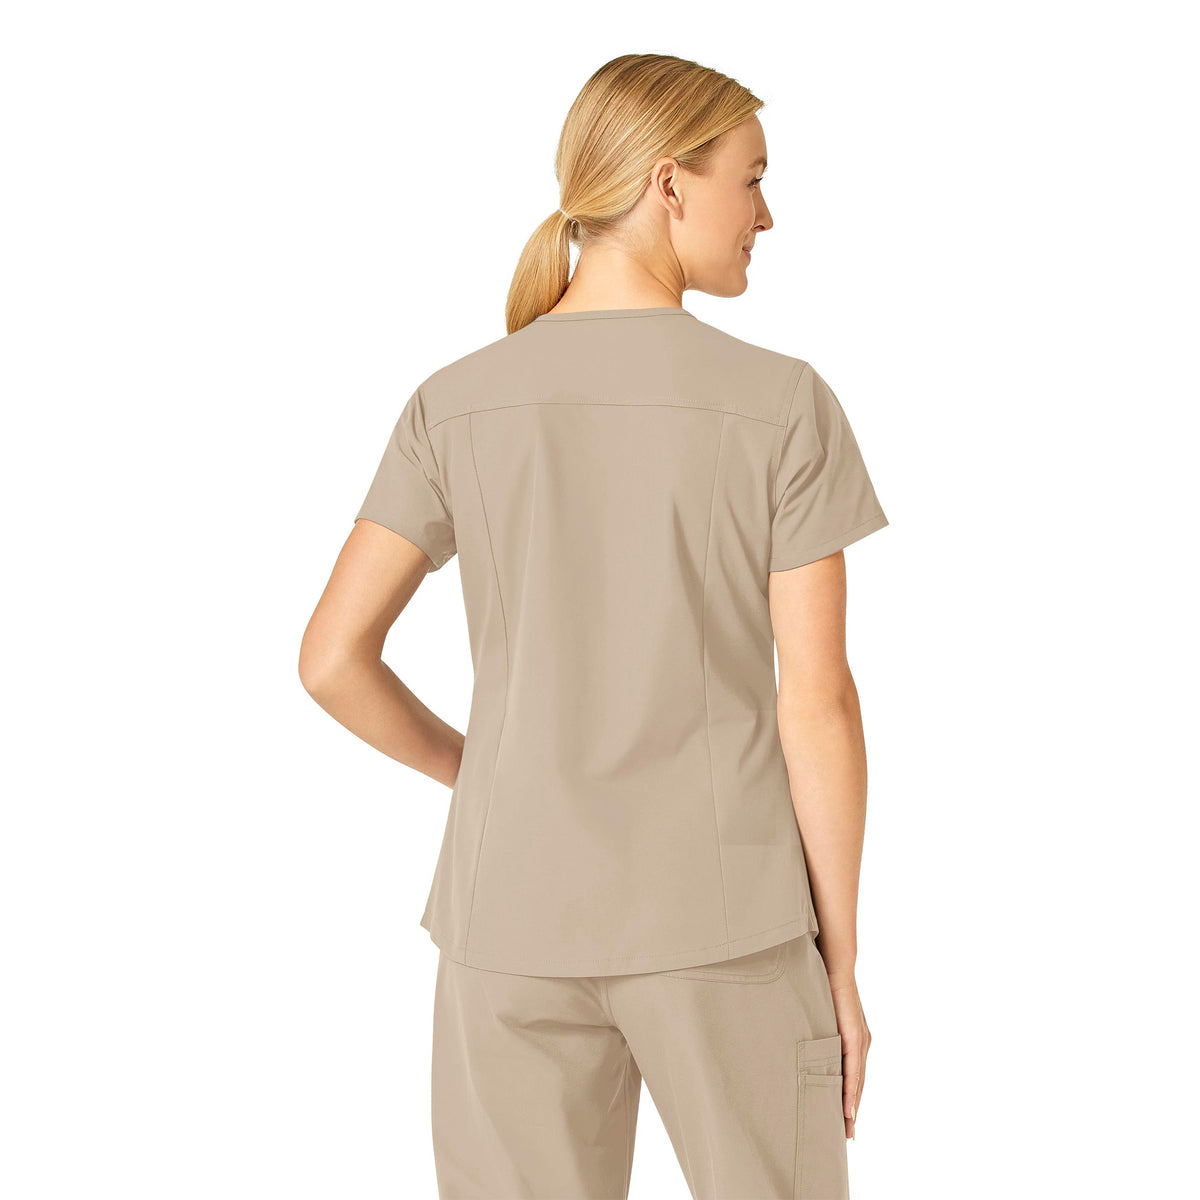 Force Essentials Women's V-Neck Scrub Top Khaki back view